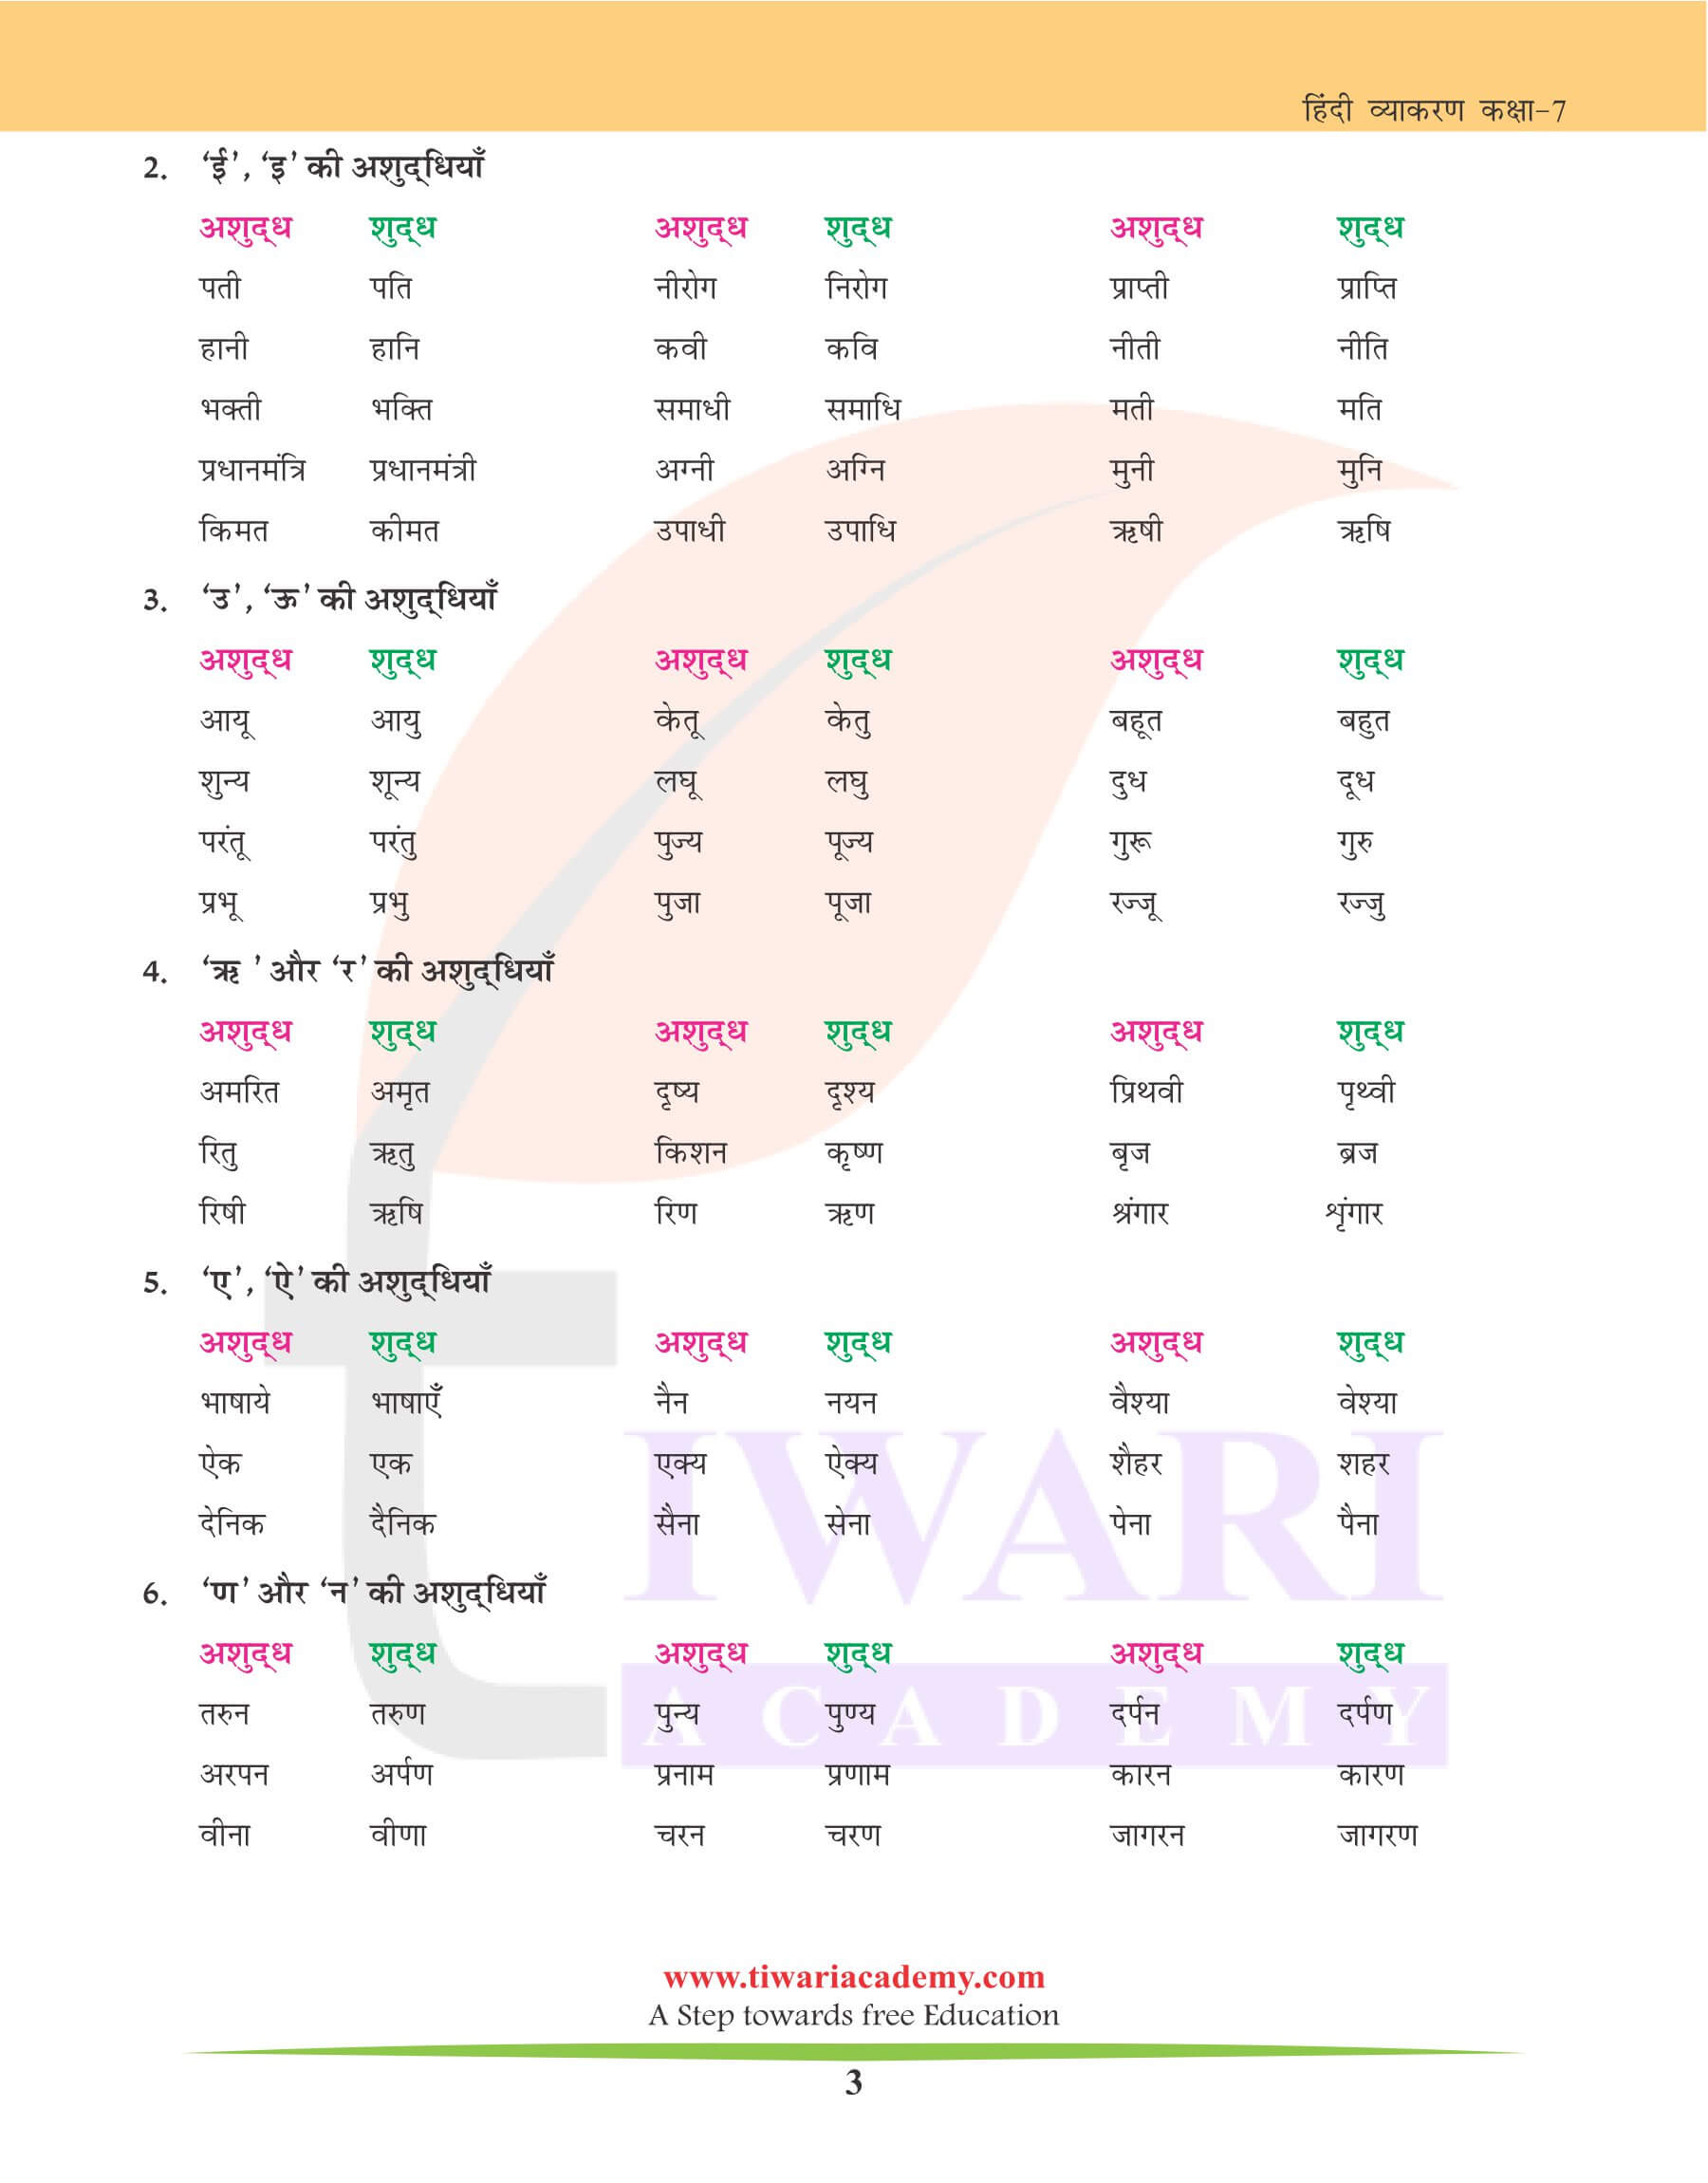 कक्षा 7 हिंदी व्याकरण अध्याय 4 वर्तनी विचार के उदाहरण